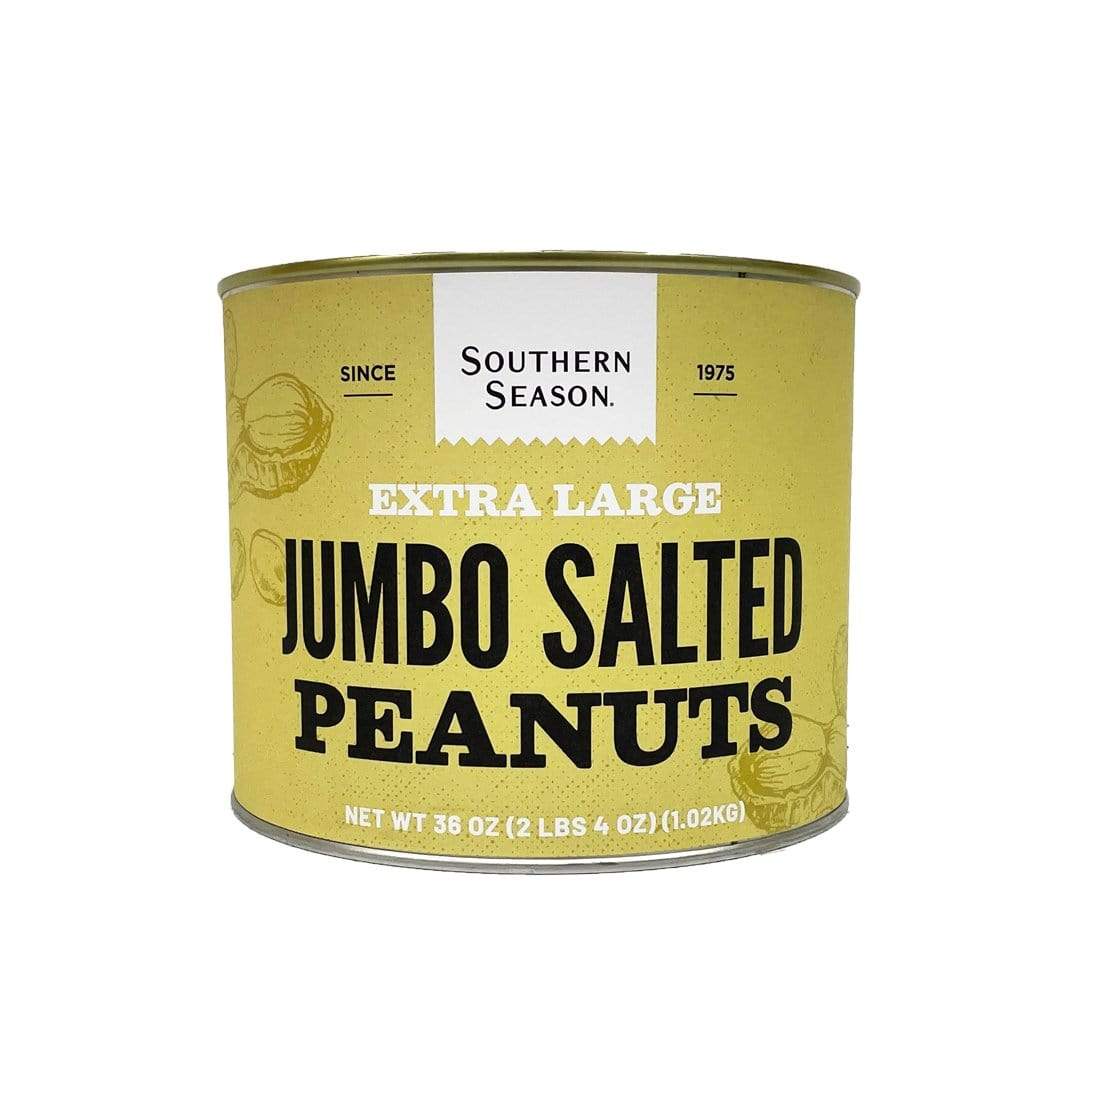 Southern Season Nuts Southern Season Jumbo Salted Peanuts 36 oz